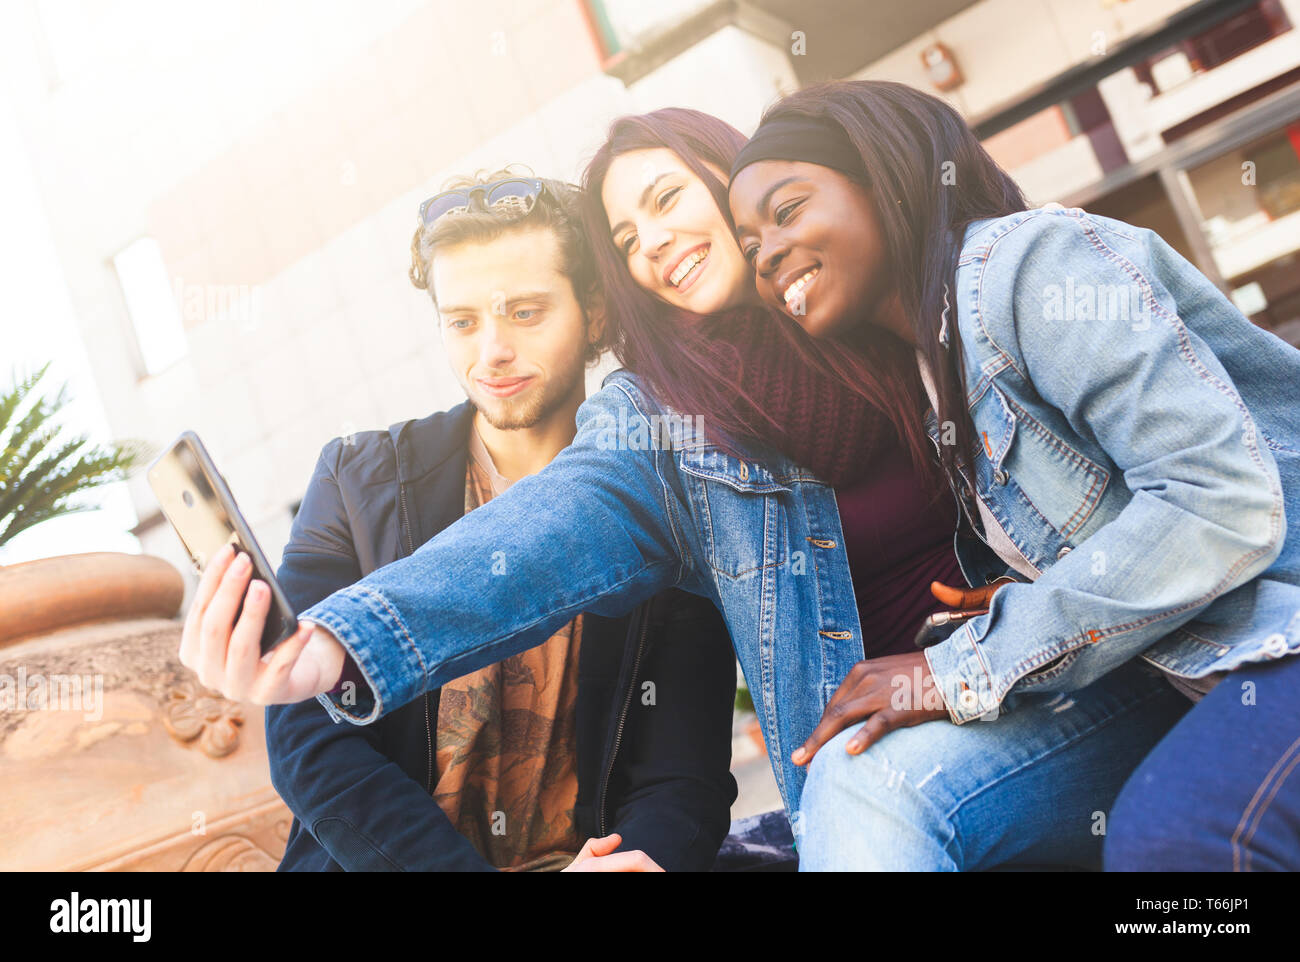 Three friends take a selfie. Interracial friendship concept. Stock Photo